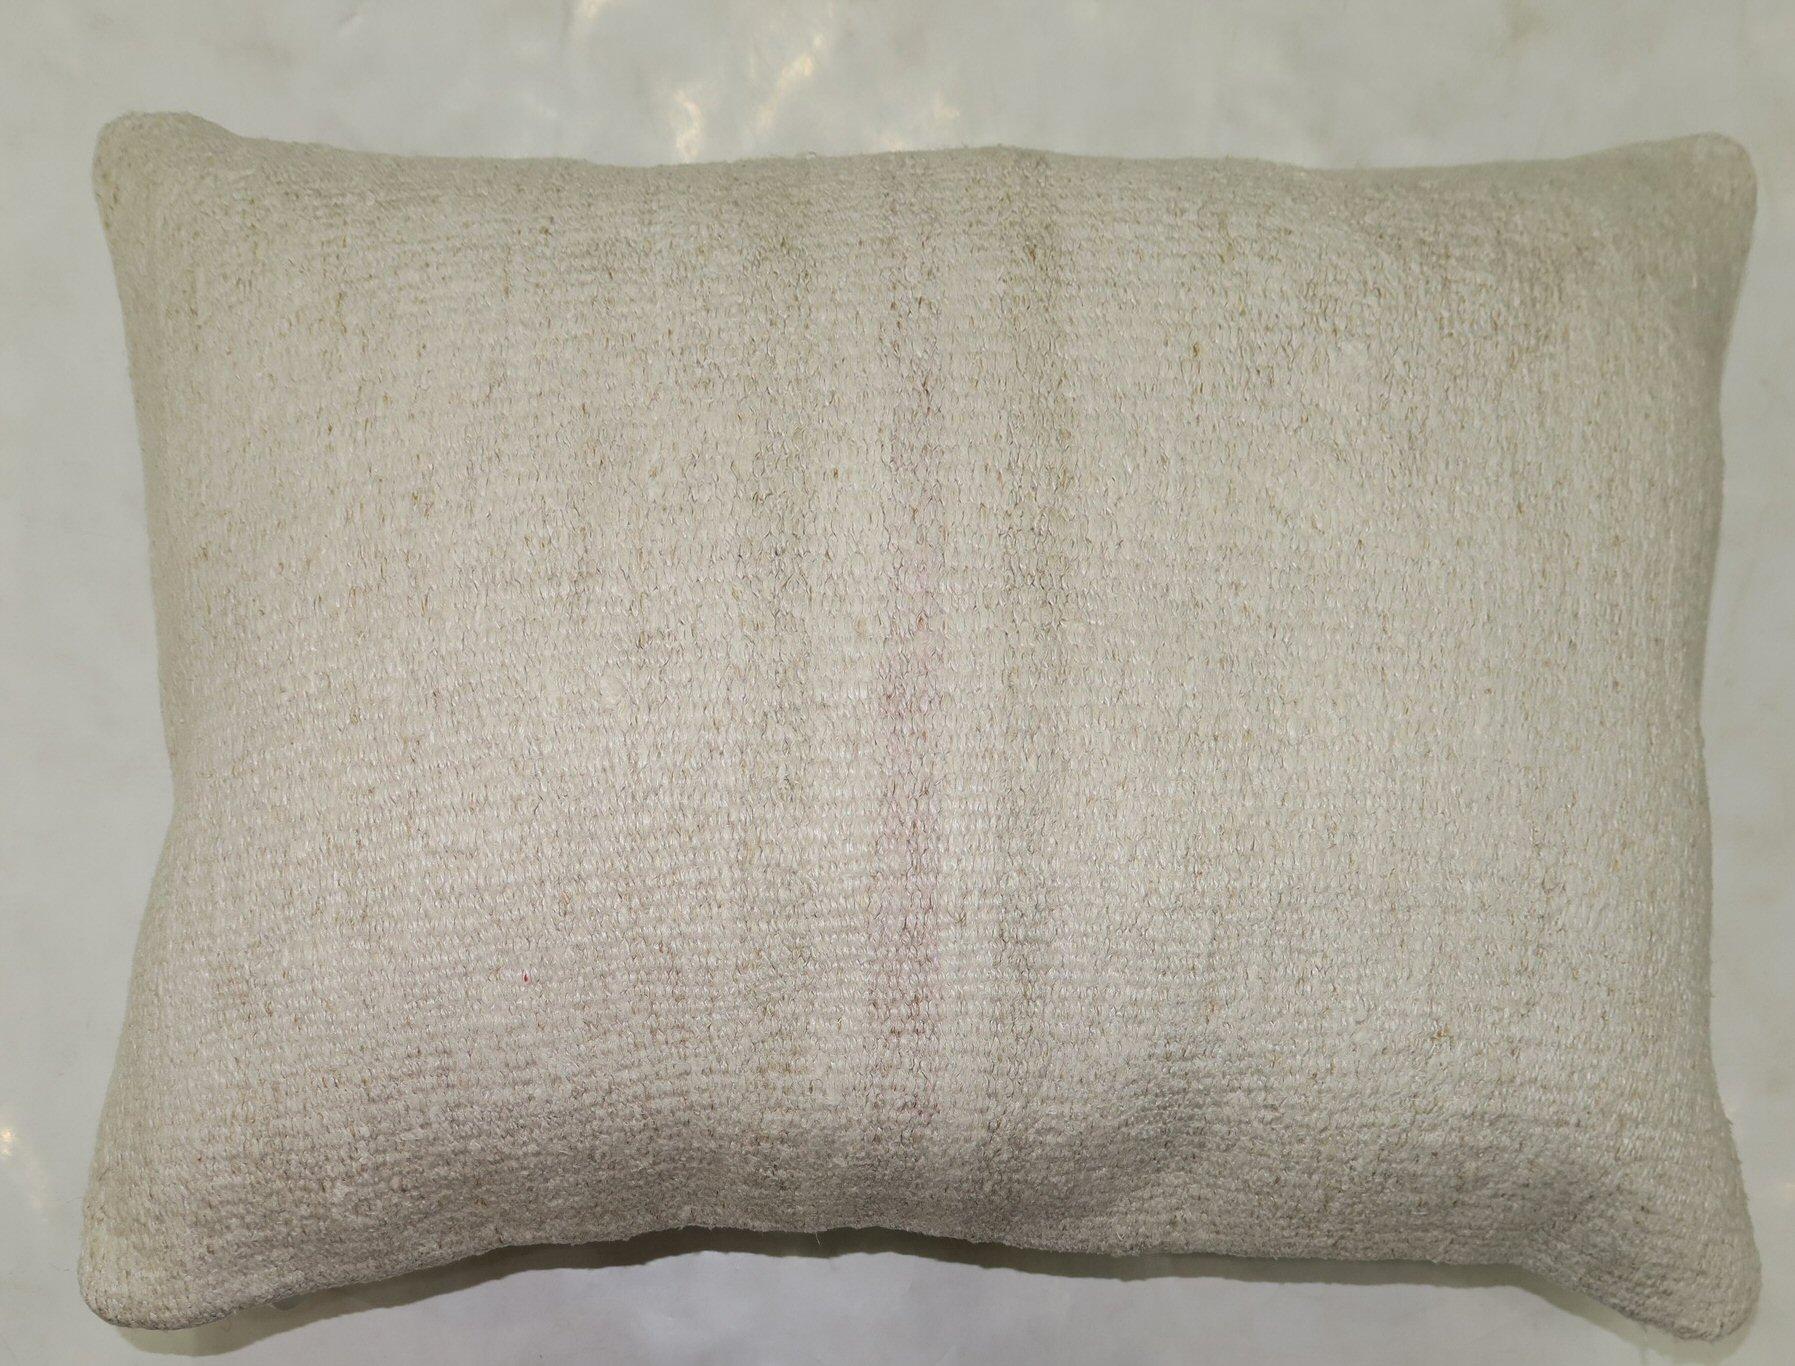 Pillow made from Vintage Turkish Hemp Kilim 

Measures: 16